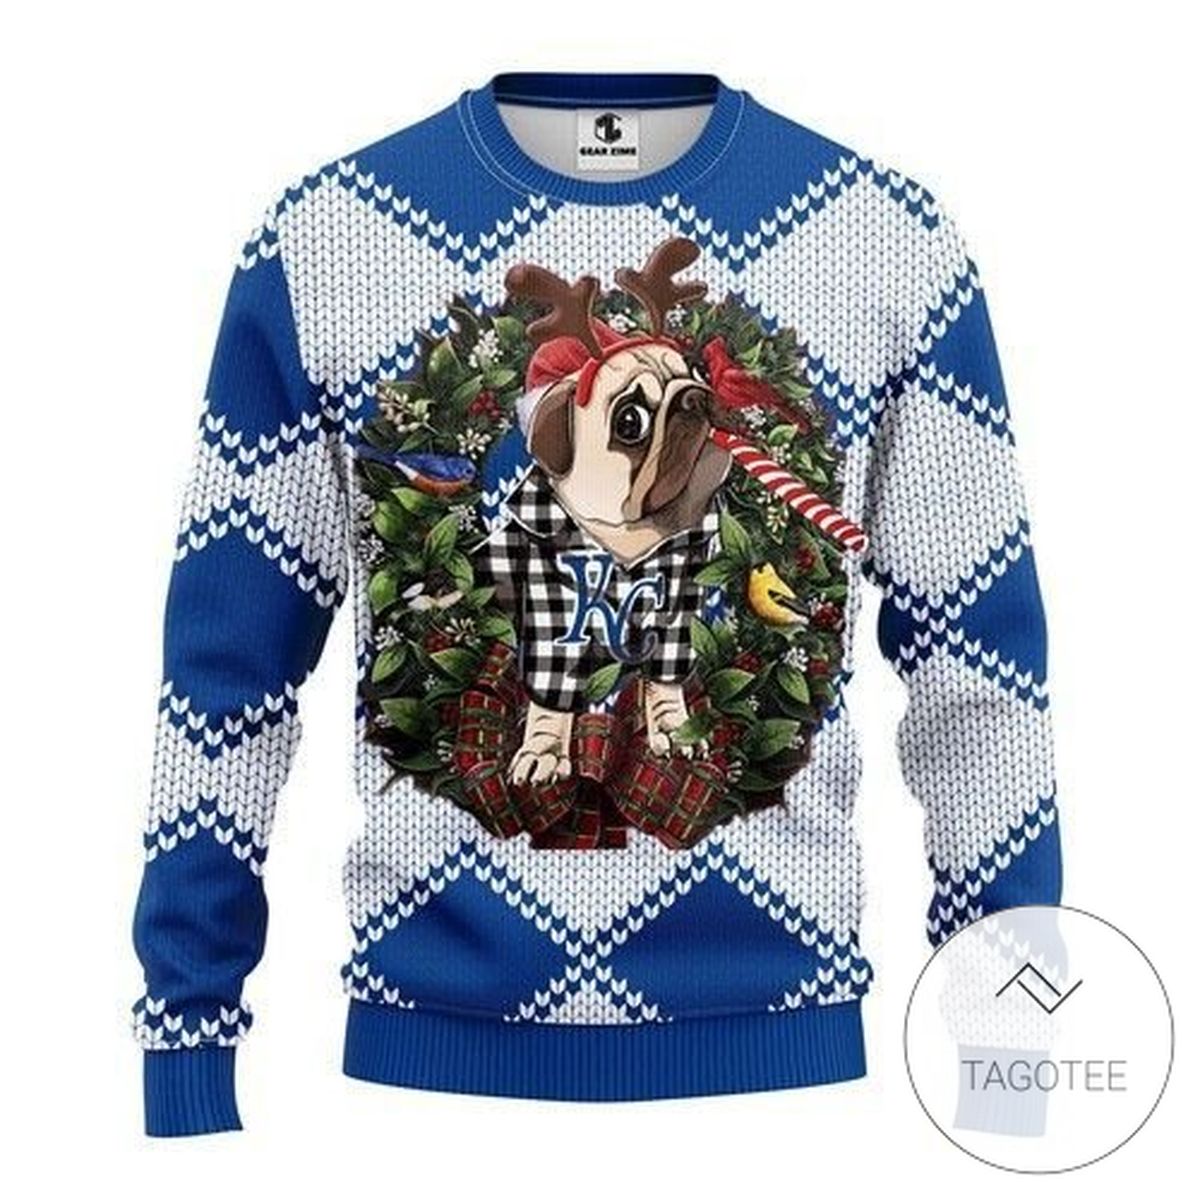 Mlb Kansas City Royals Pug Dog Sweatshirt Knitted Ugly Christmas Sweater